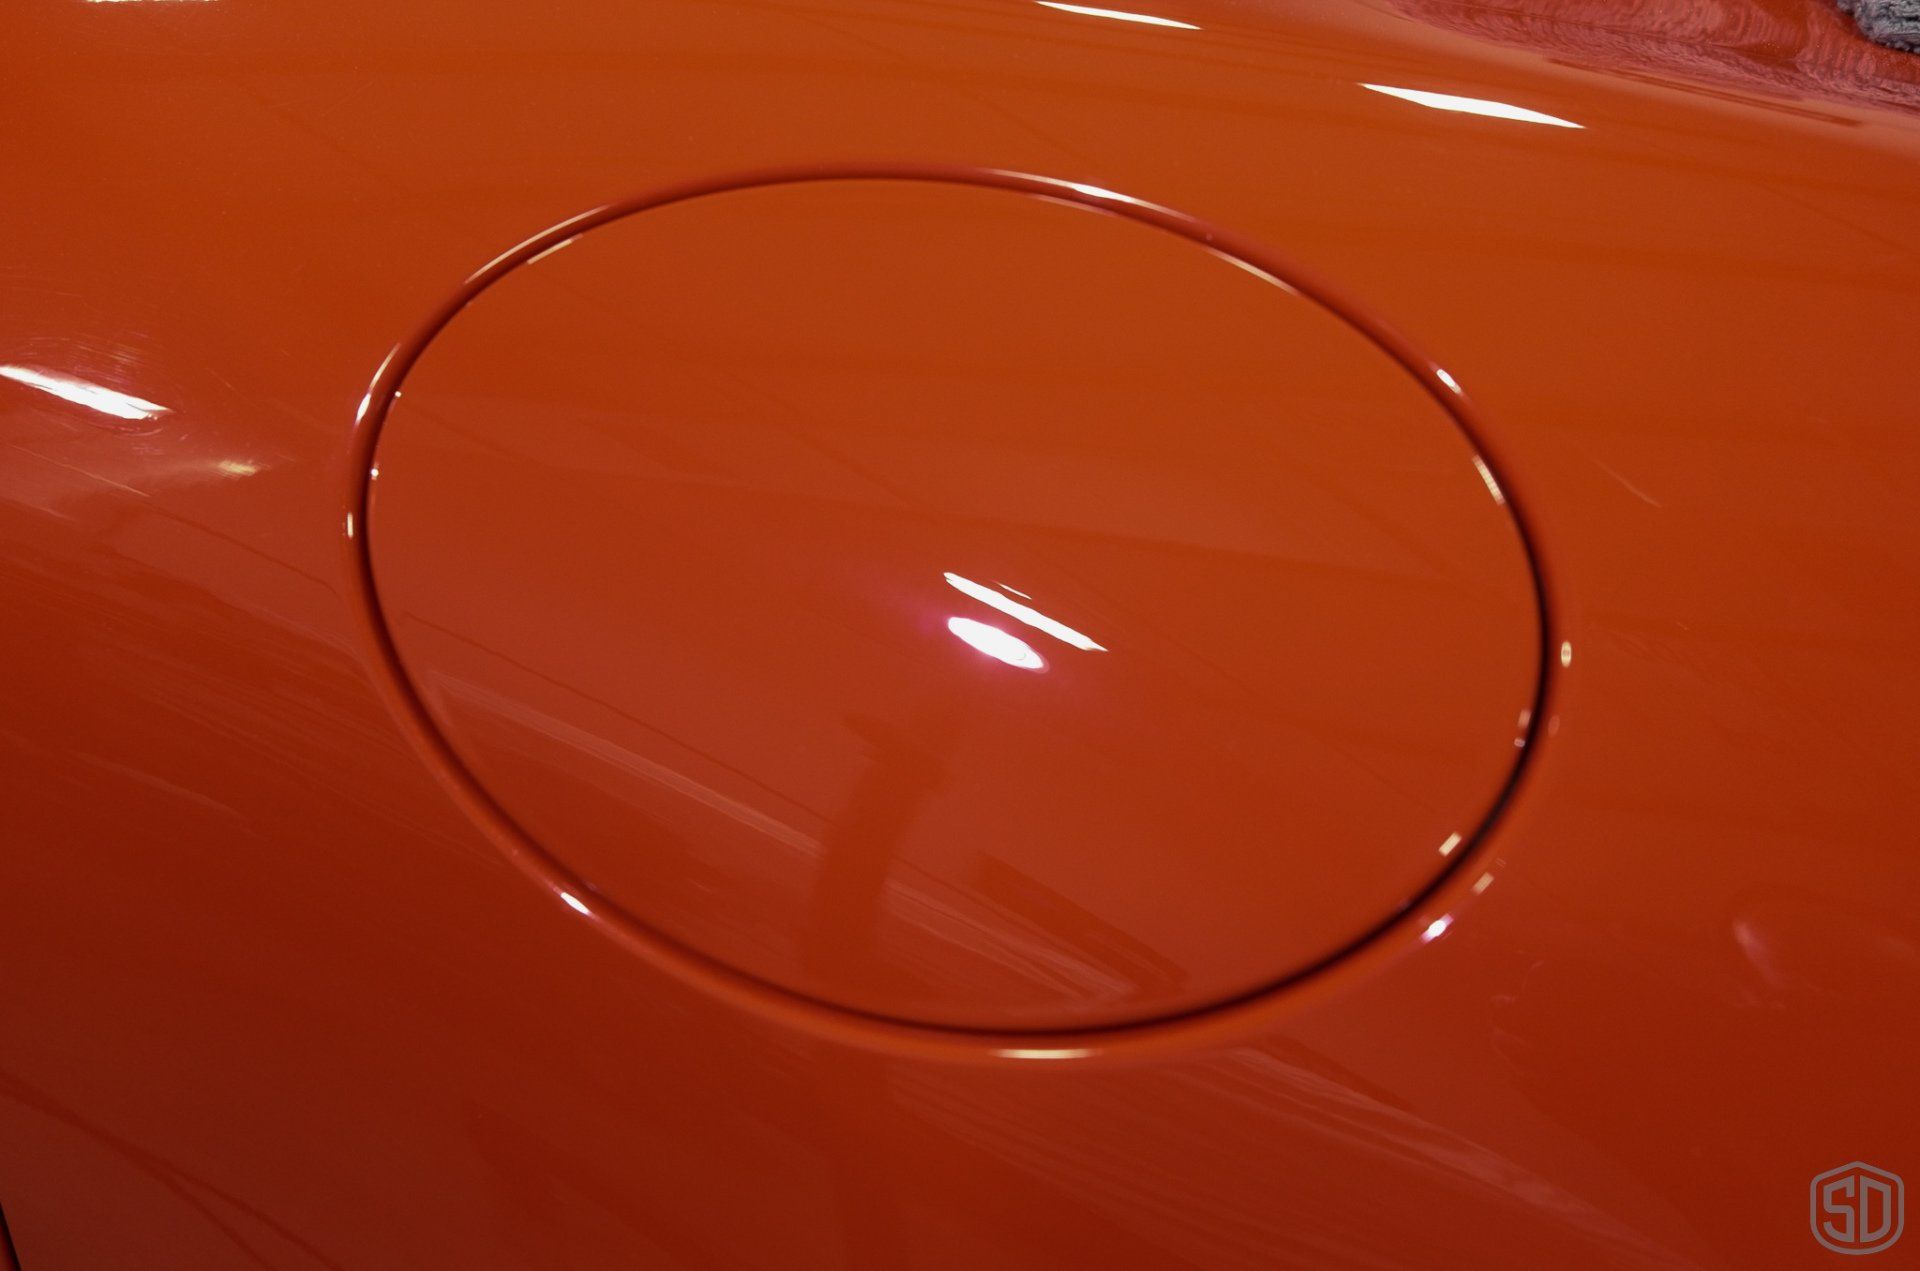 2016 Porsche  911 GTS Detailing, Paint Correction, Paint Chip Repair, Nano-Titanium Glass Coating, Paint Protection Film before Orlando, Florida